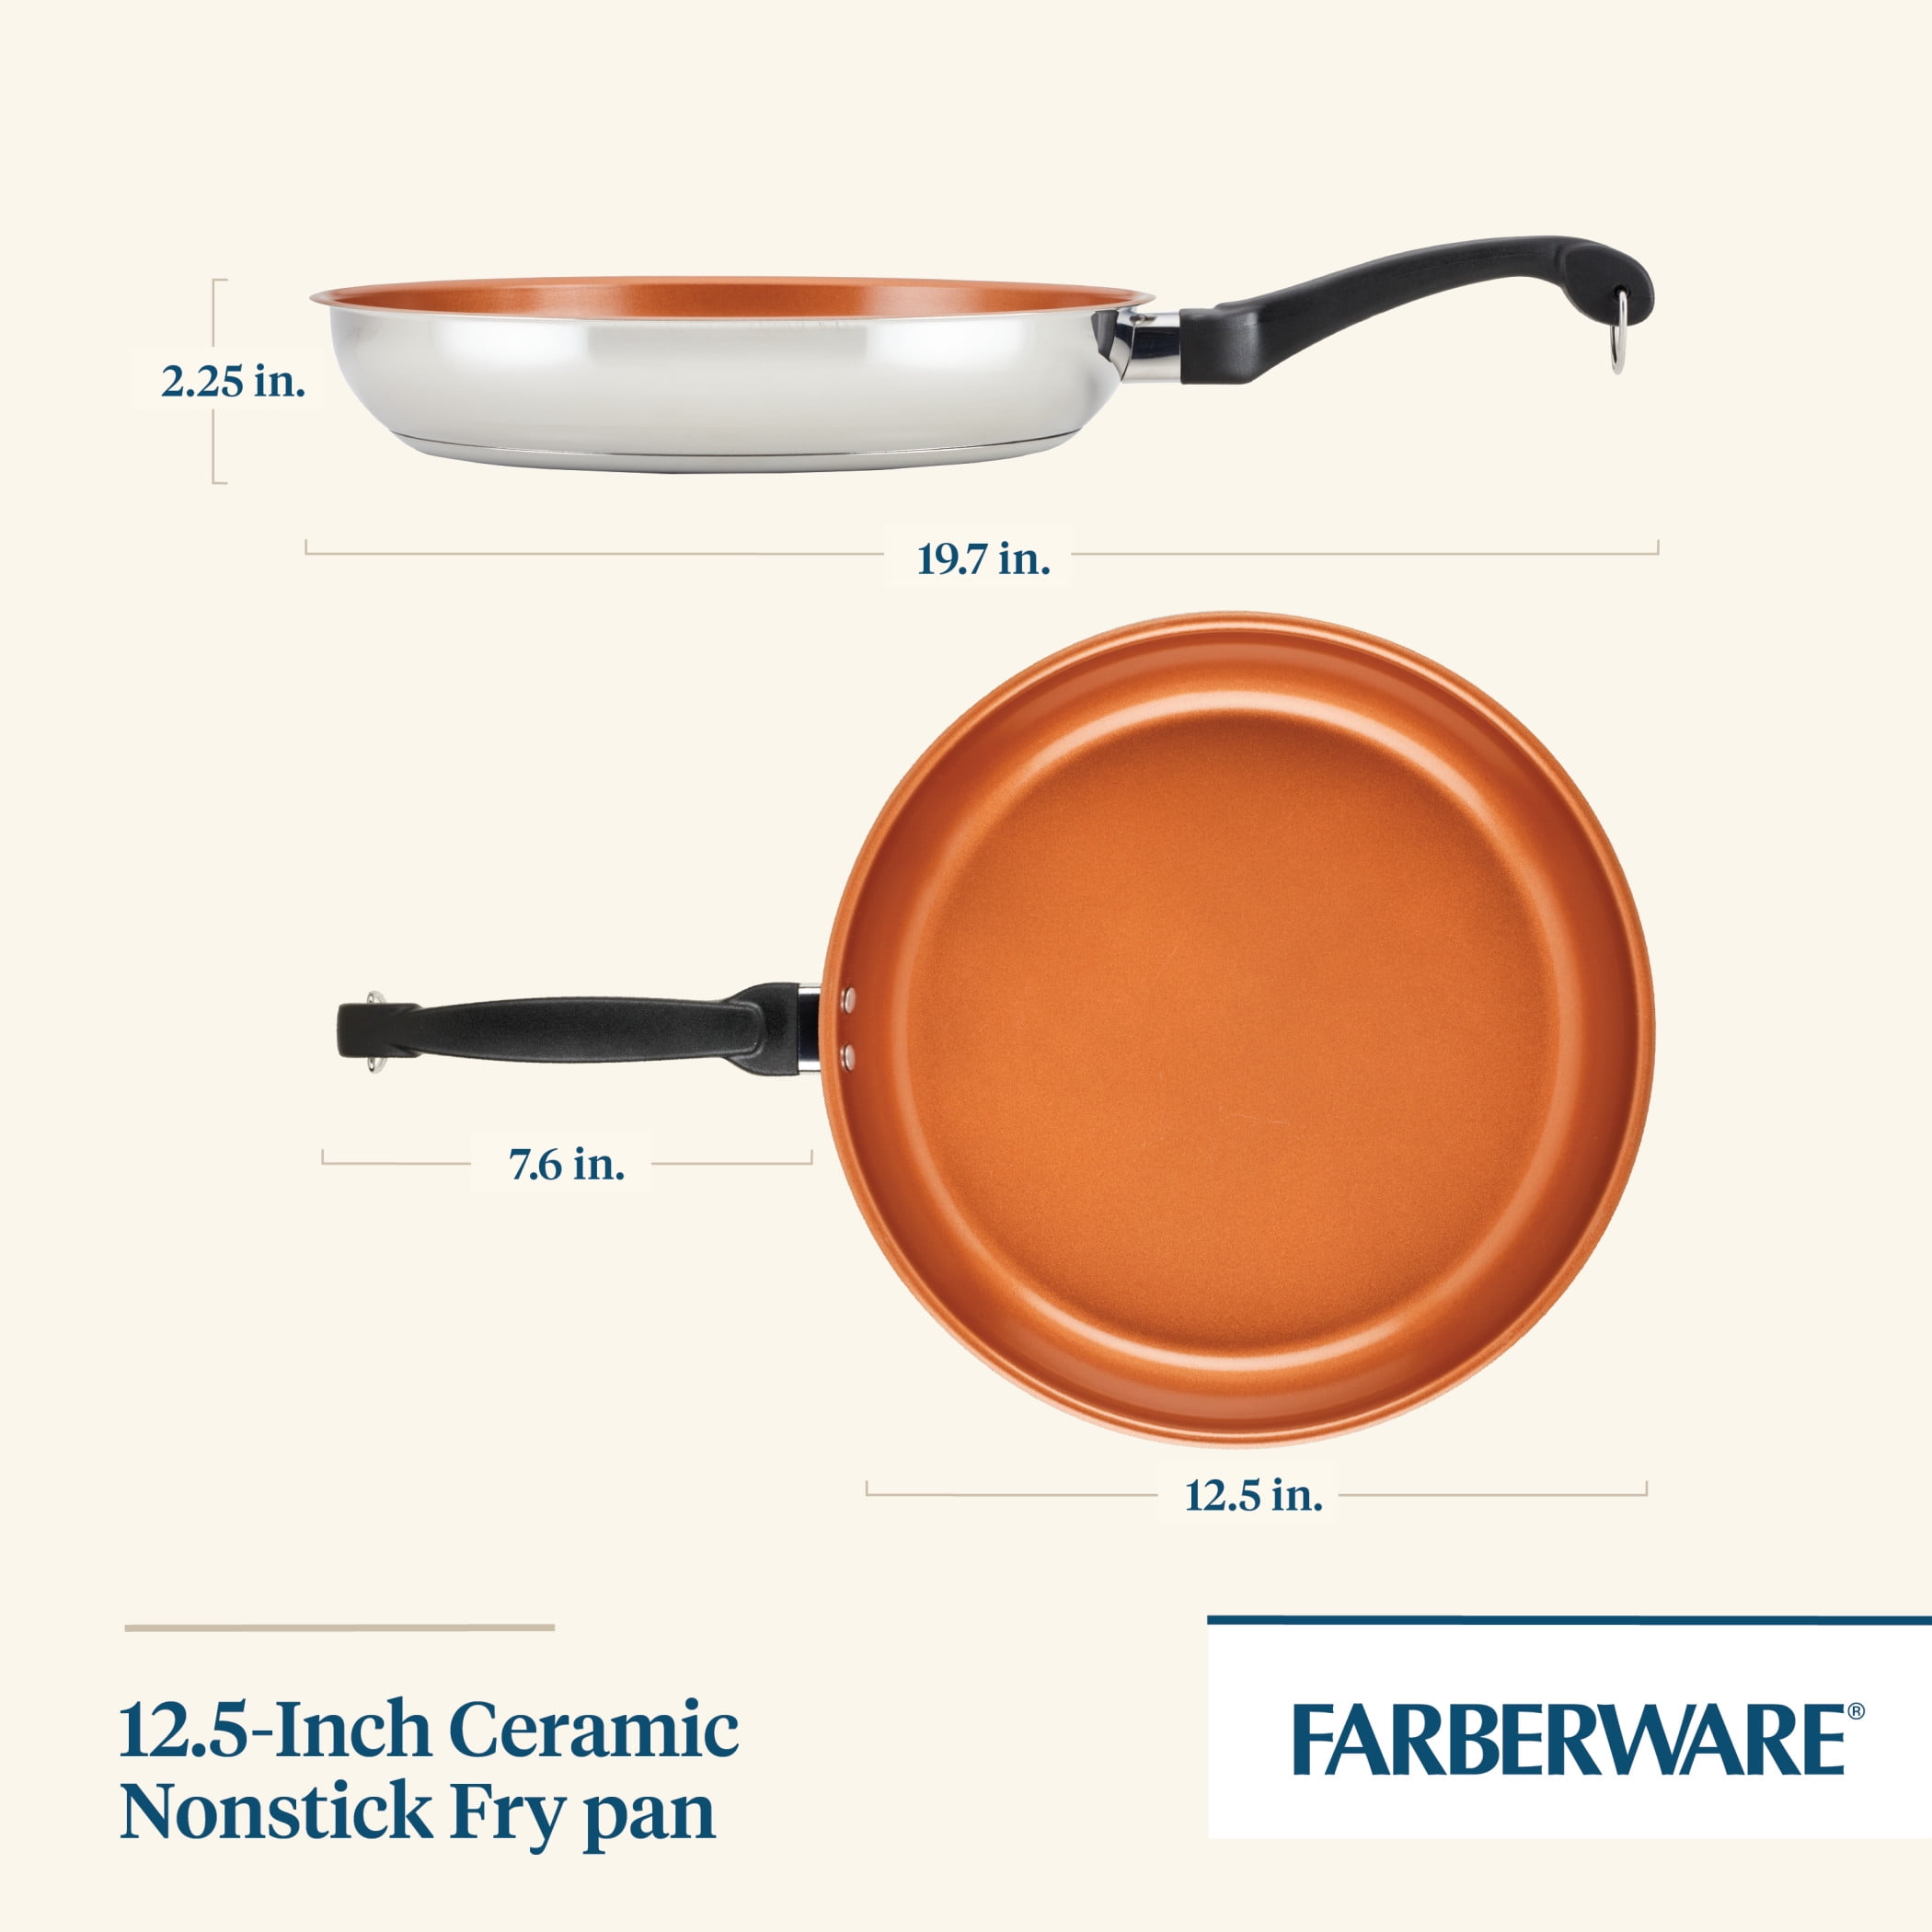 Farberware's Ceramic Bakeware Are Cheery and Work Like a Charm